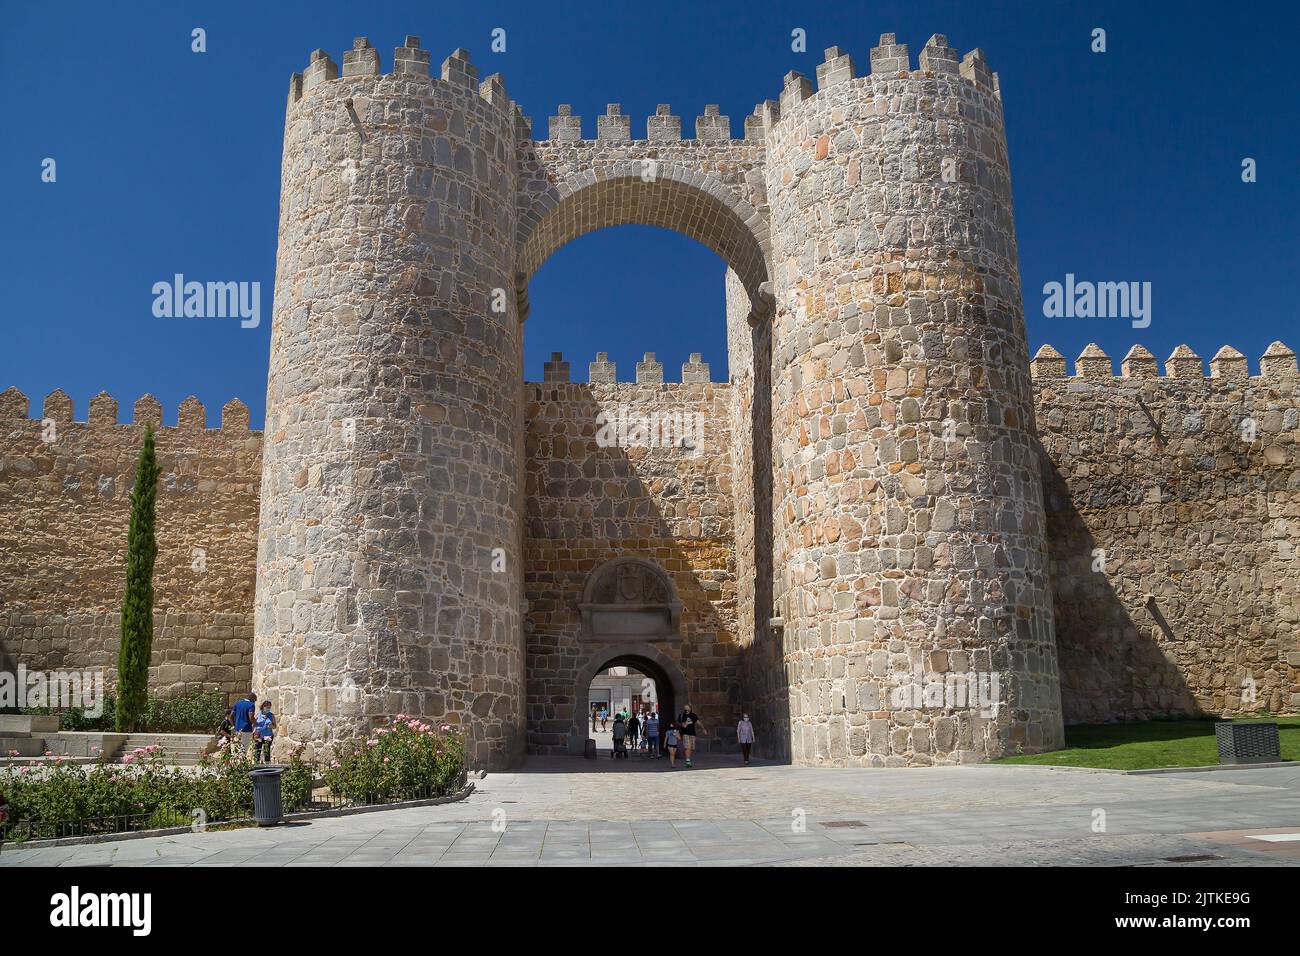 Avila, Spain - August 22, 2020: Gate of the Alcazar in the City Walls of Avila, Spain. Stock Photo